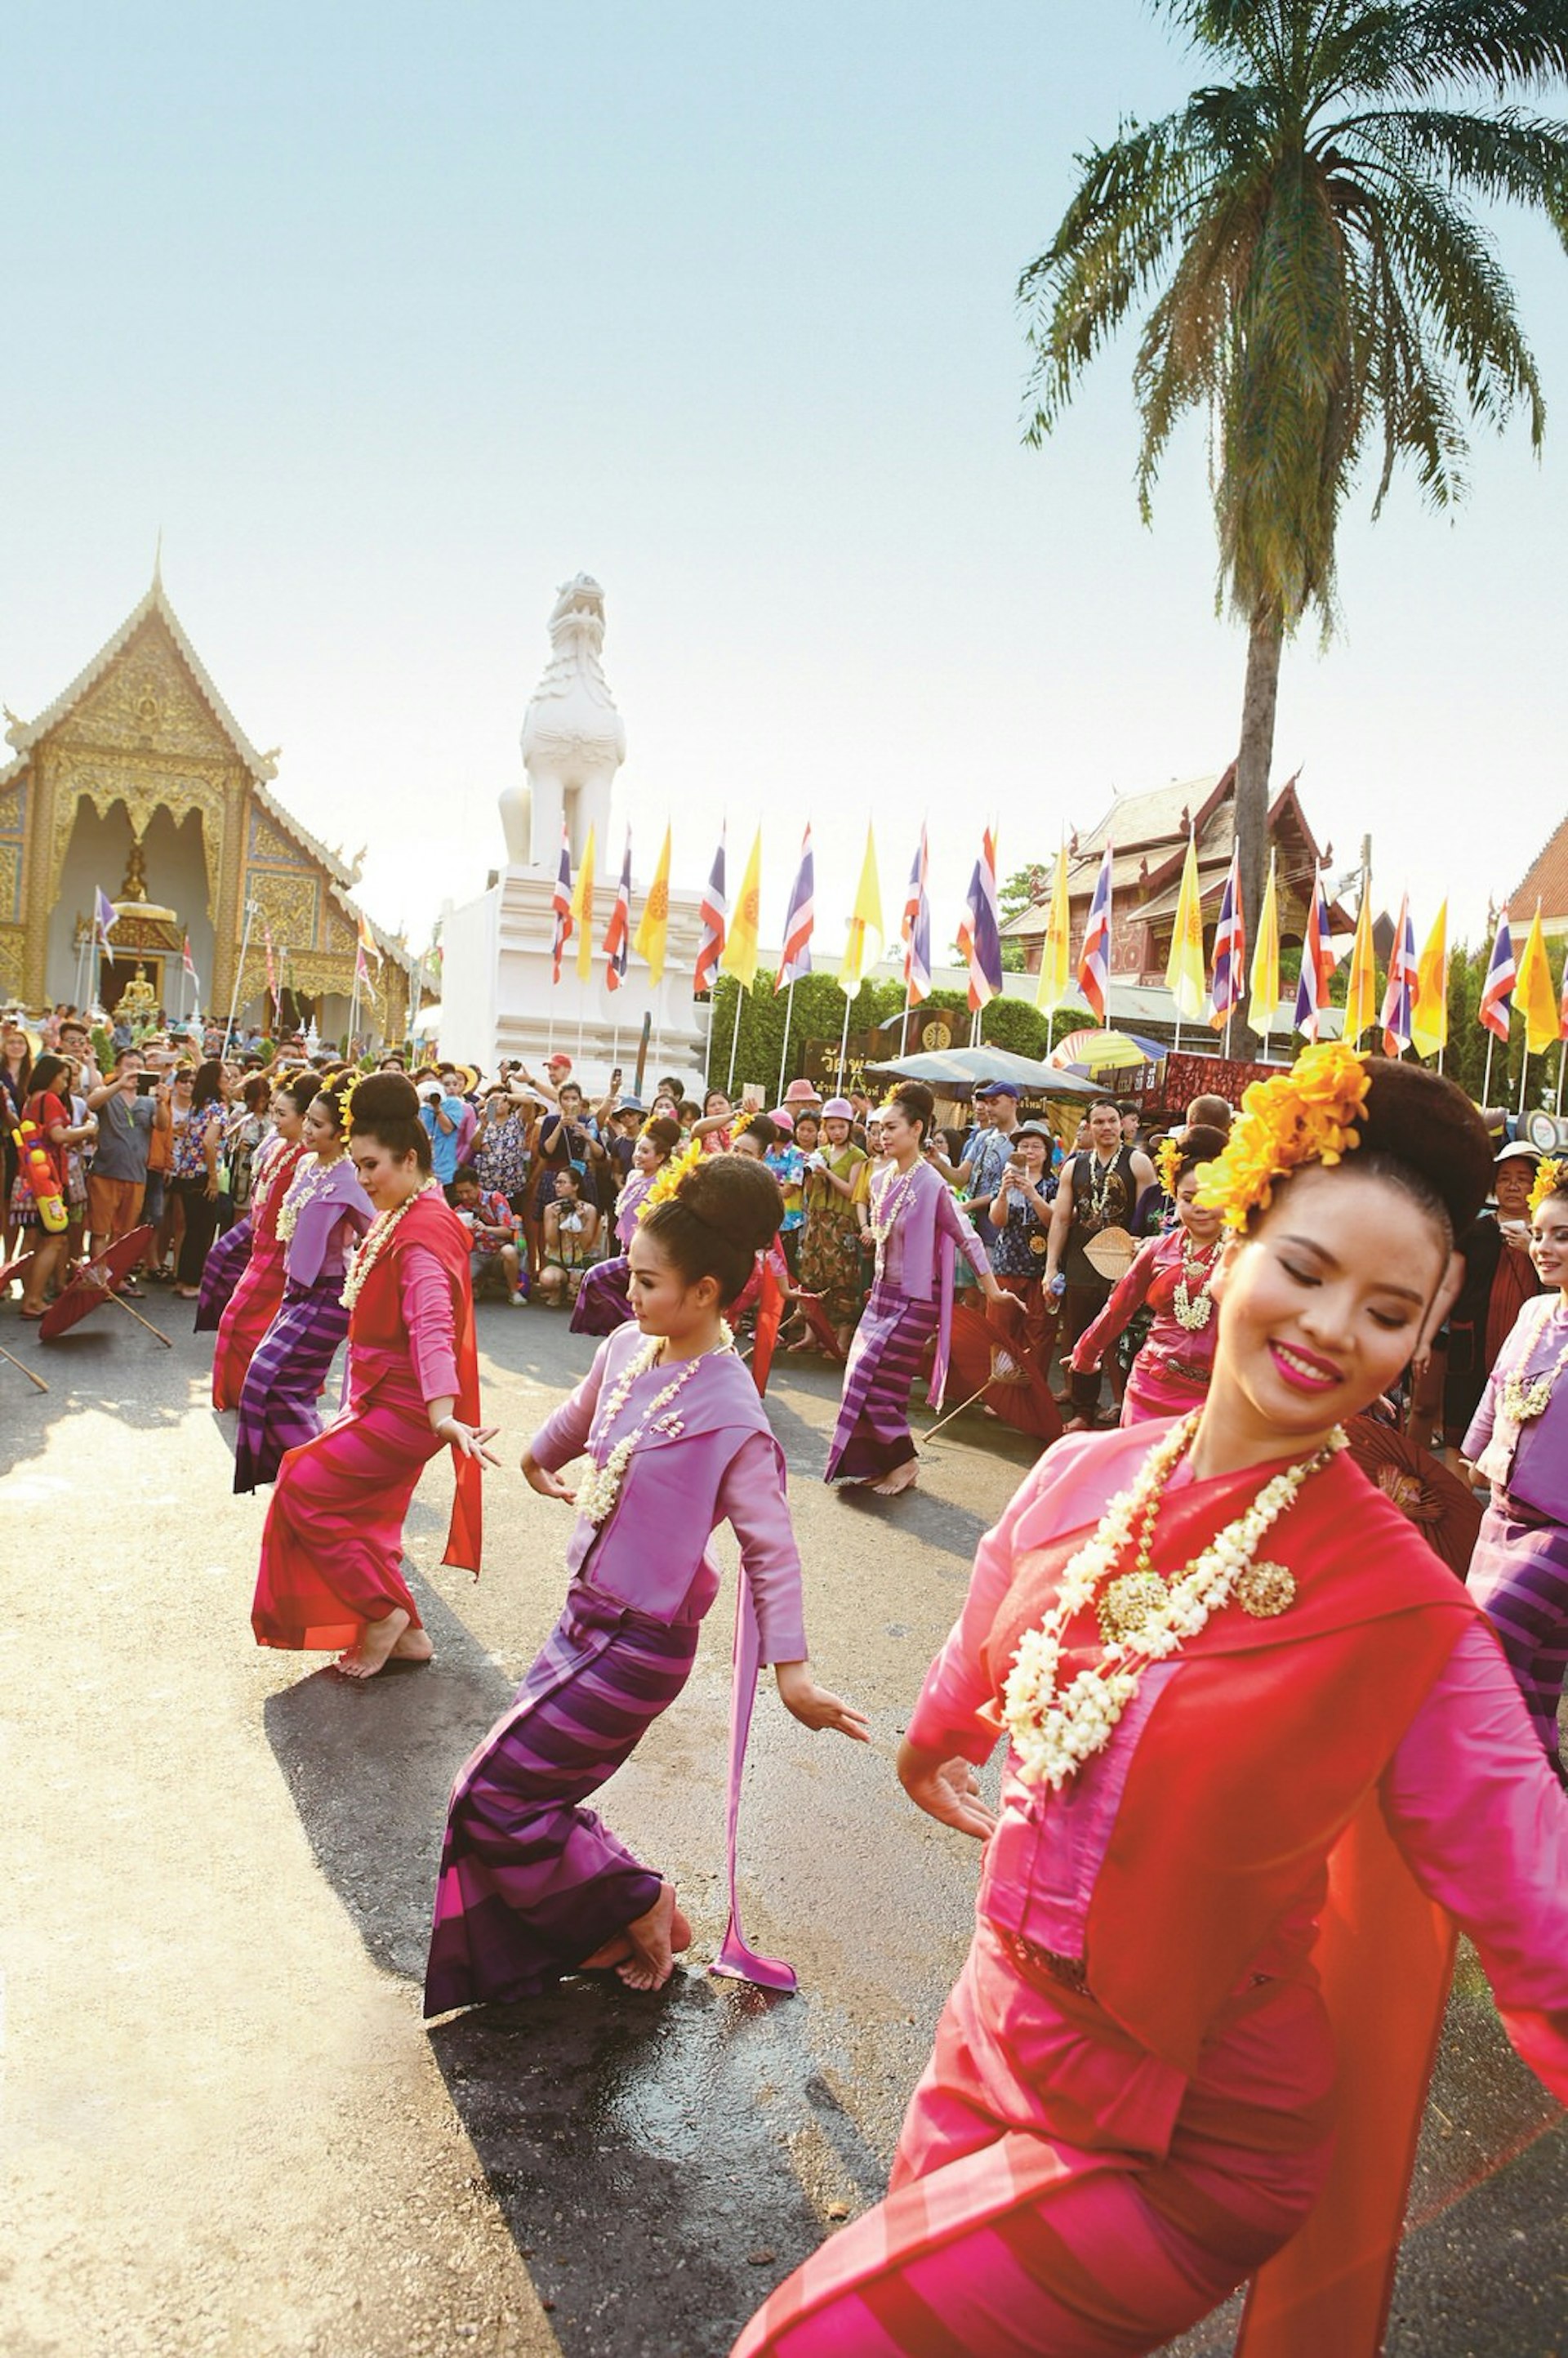 Songkran Festival parade dancers clad in colourful dress © Matt Munro / Lonely Planet